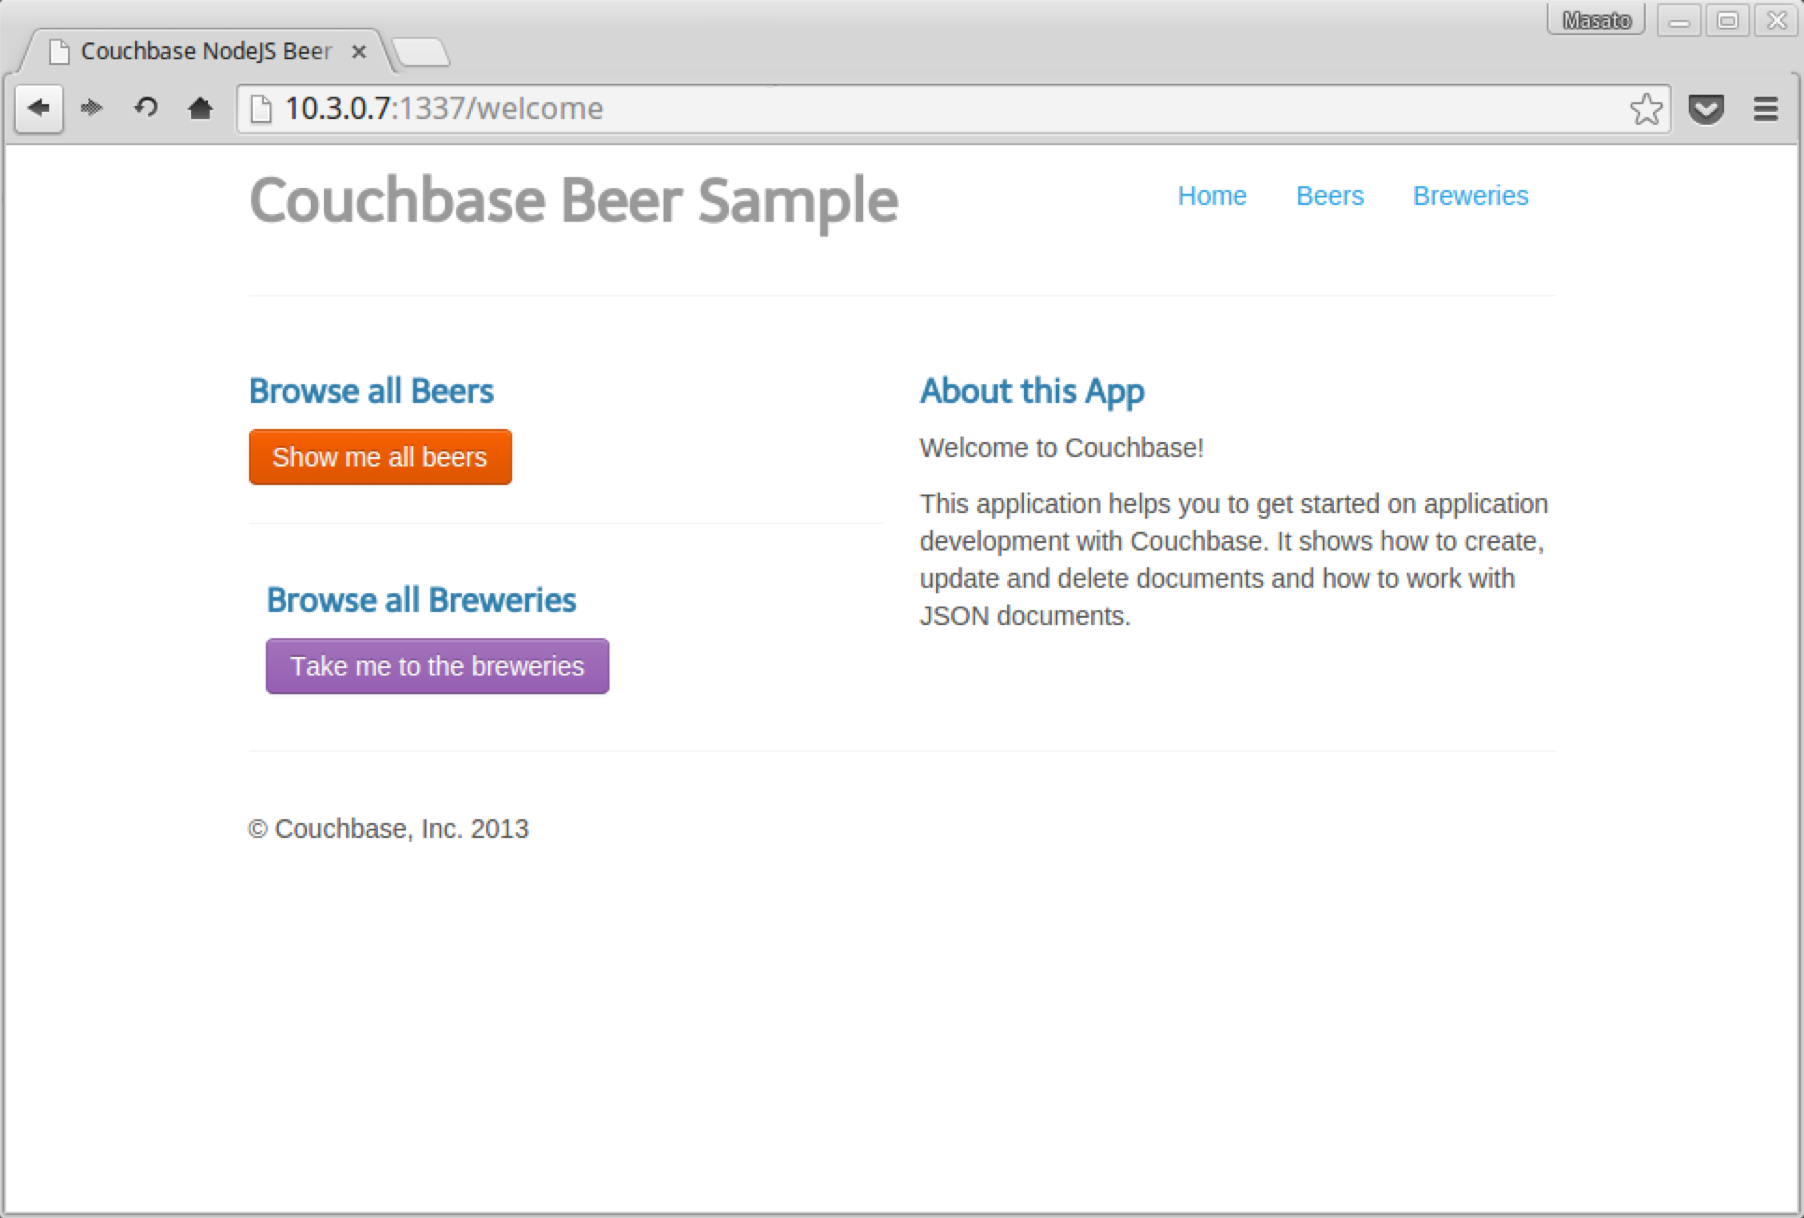 couchbase_beer_sample.png